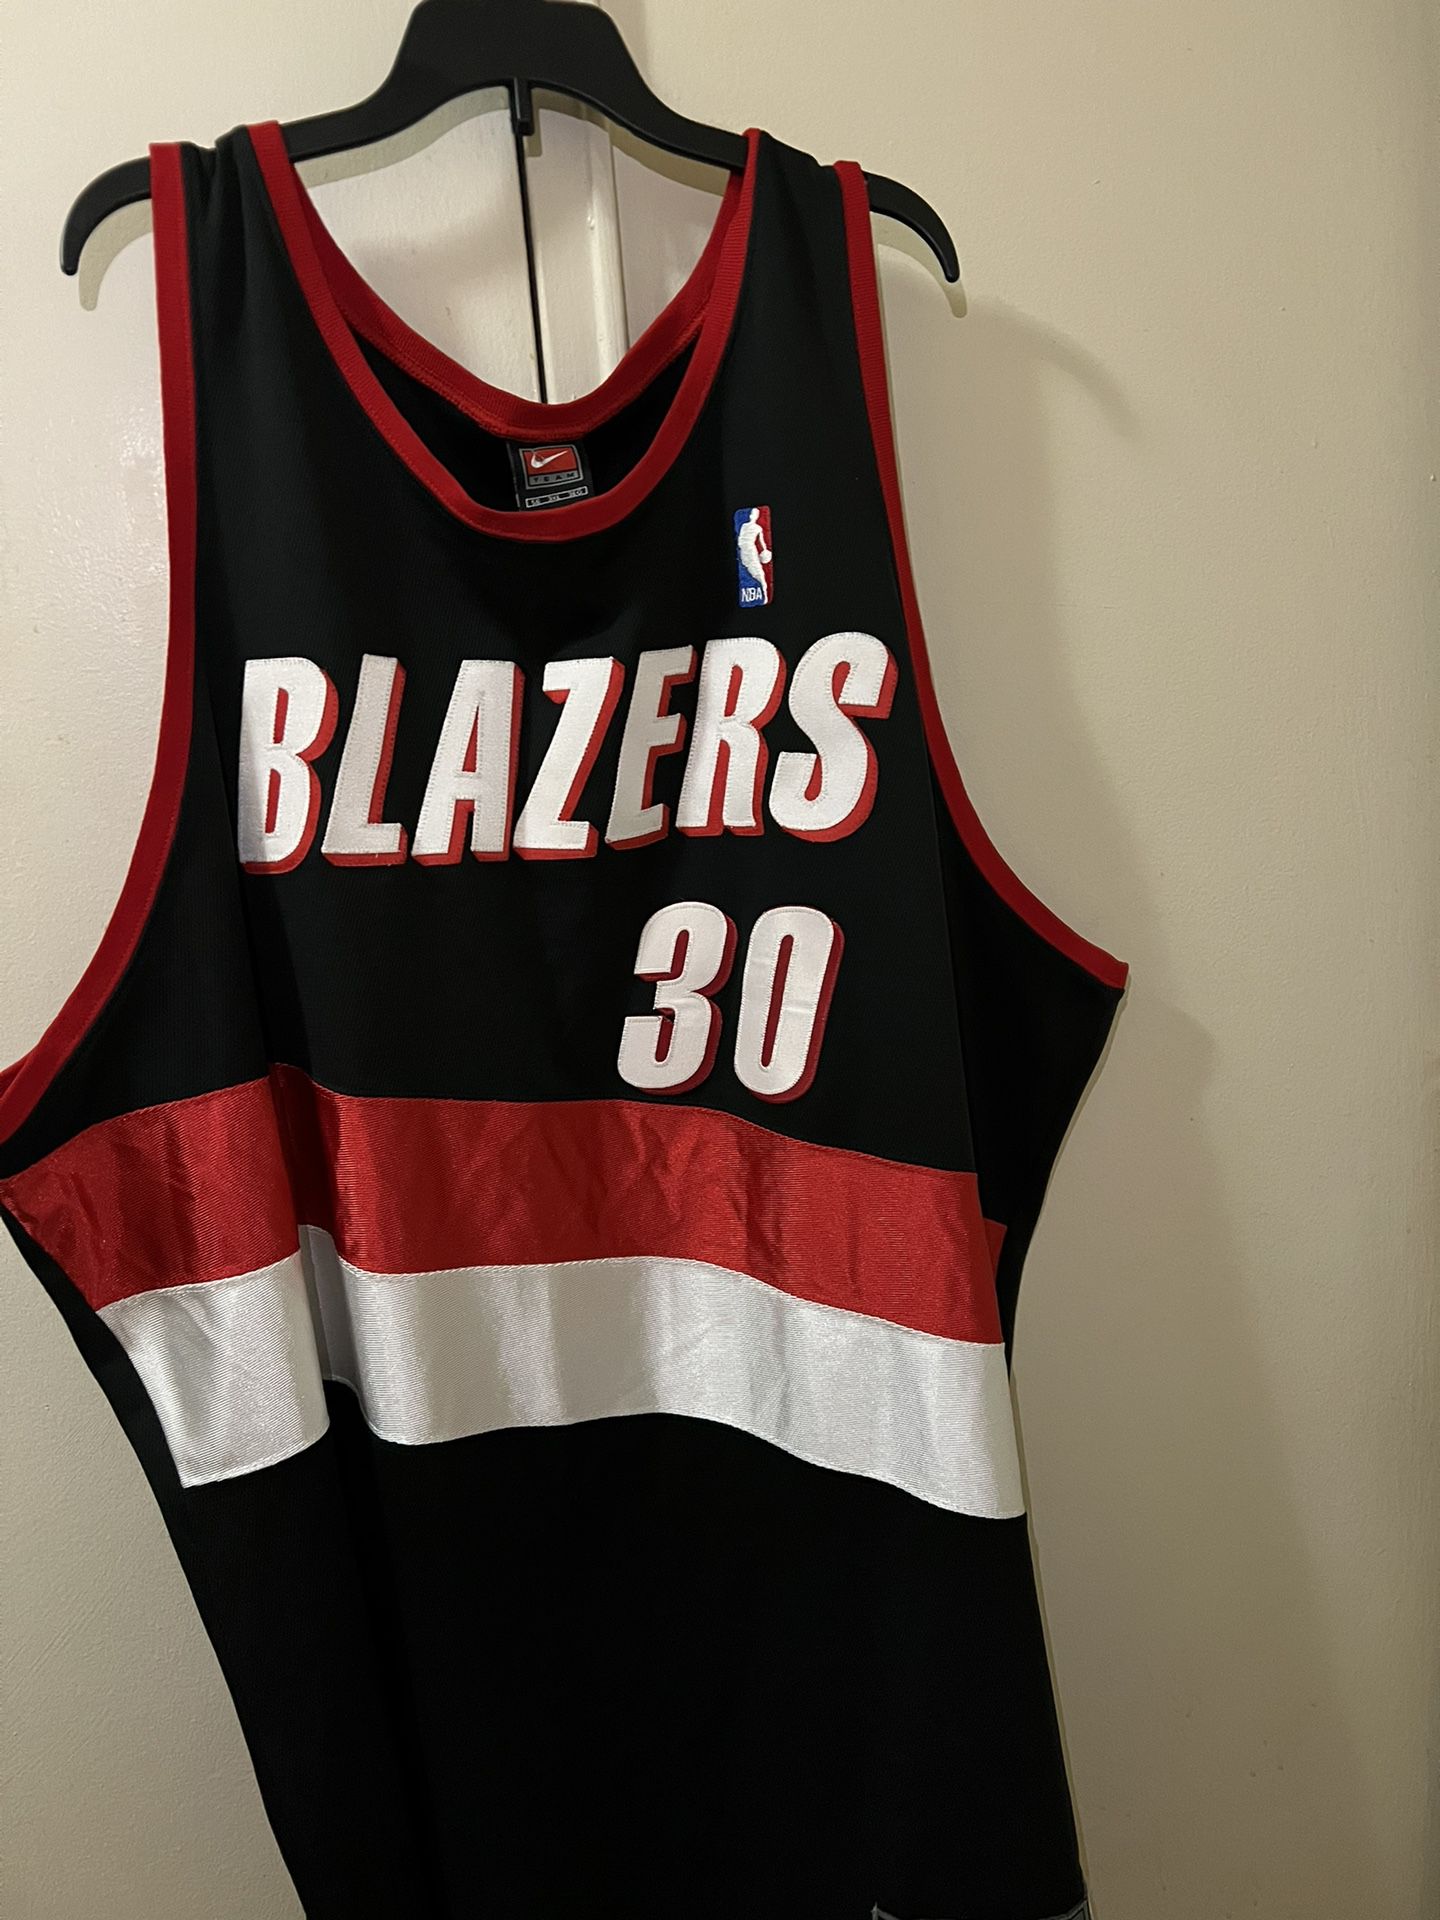 NBA) Portland Trail Blazers #30 Rasheed Wallace